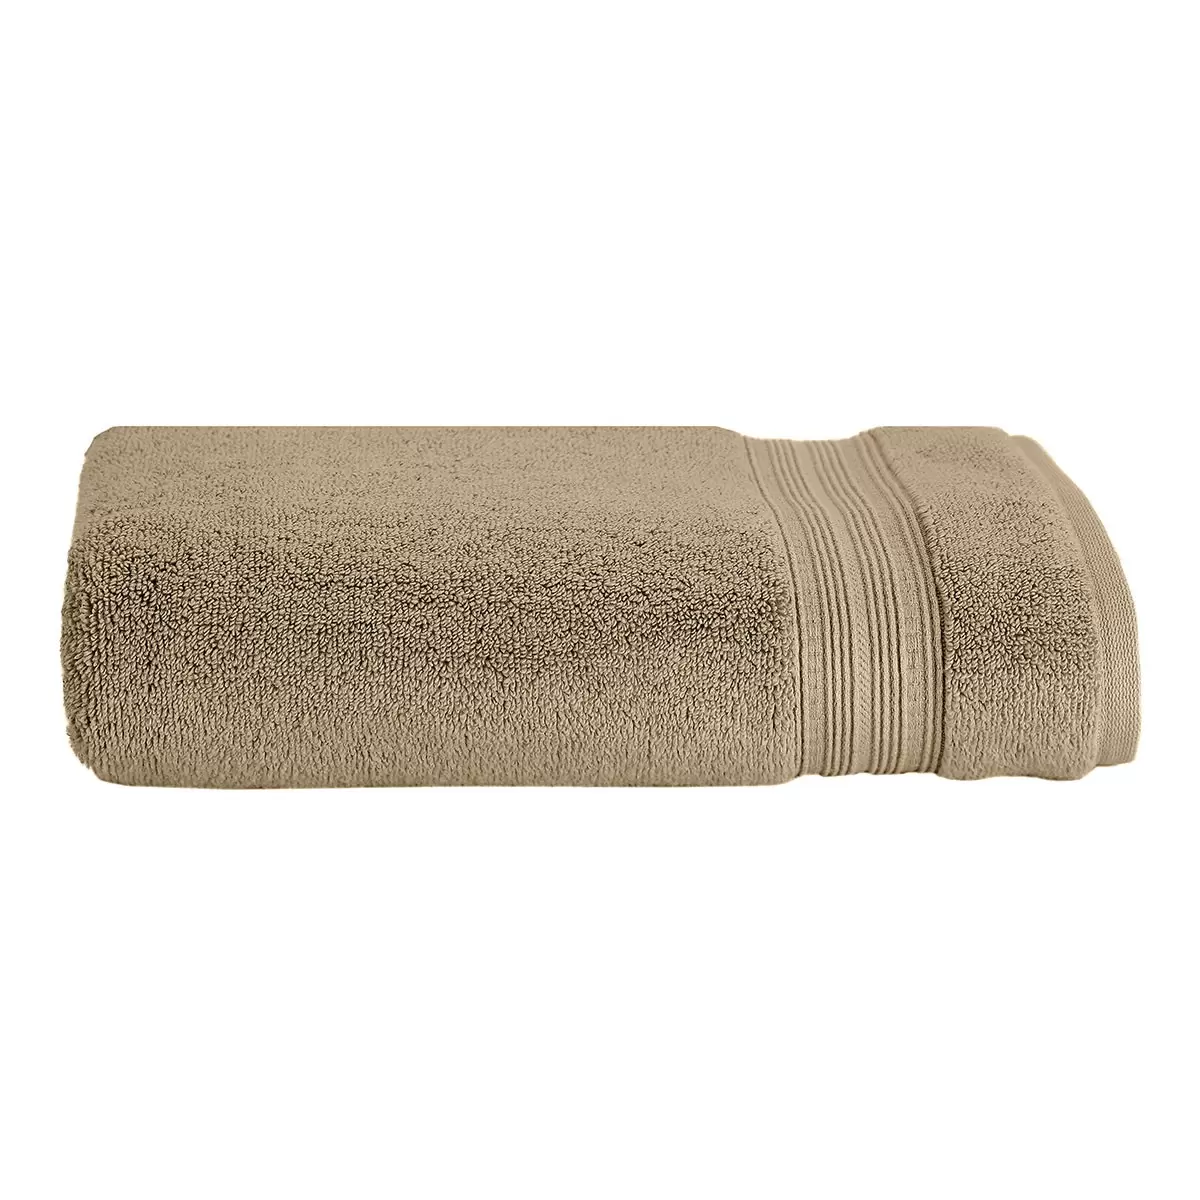 Grandeur 印度低捻純棉浴巾 76公分 X 147 公分 灰褐色